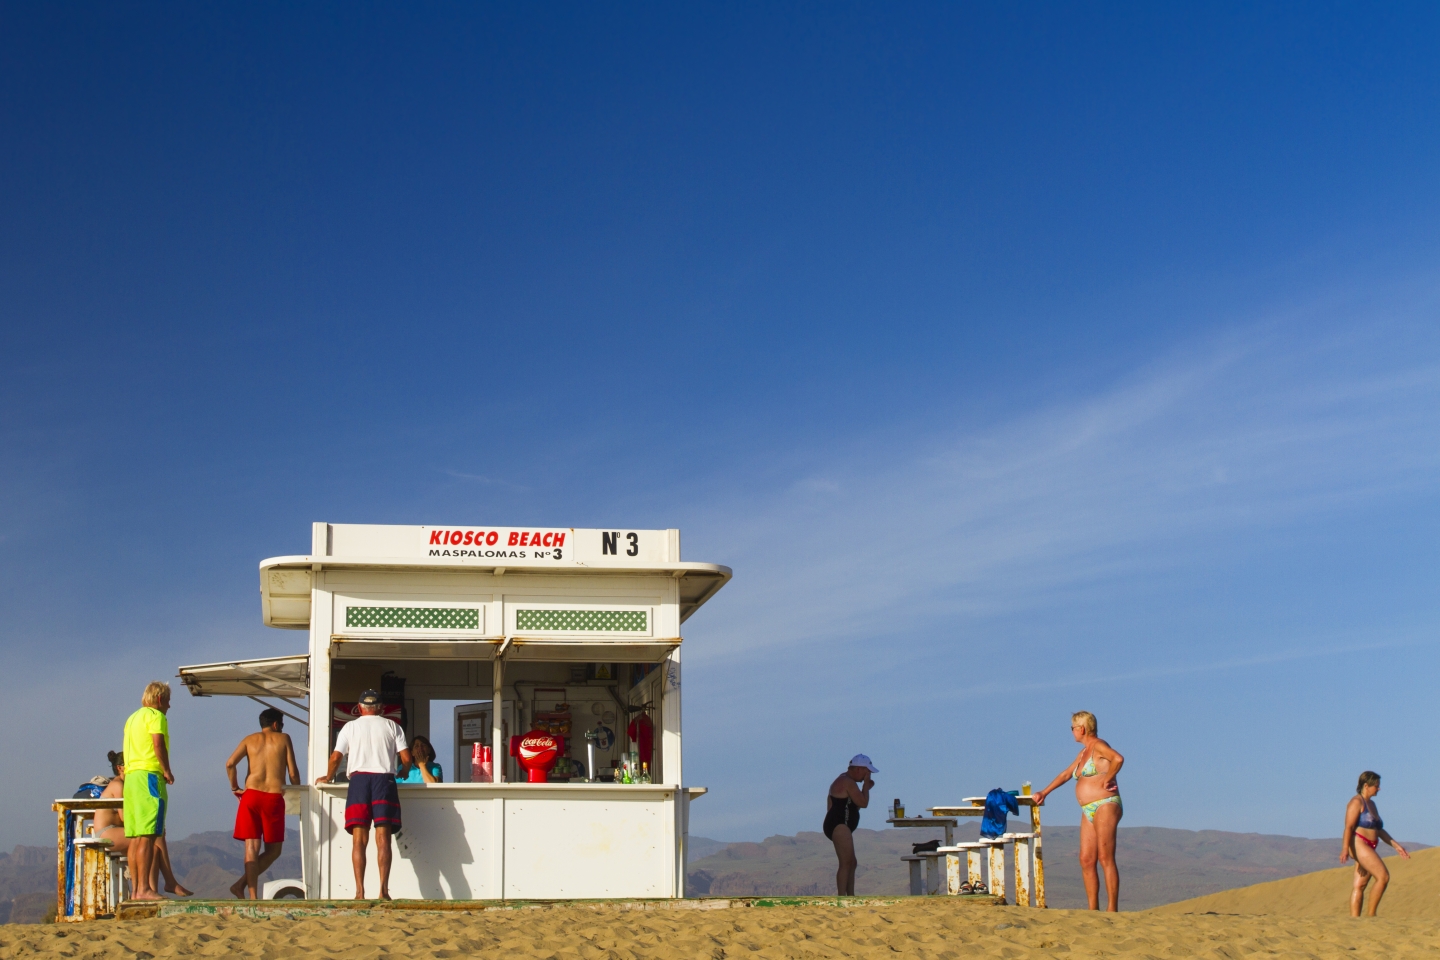 nudist kiosk at Maspalomas beach